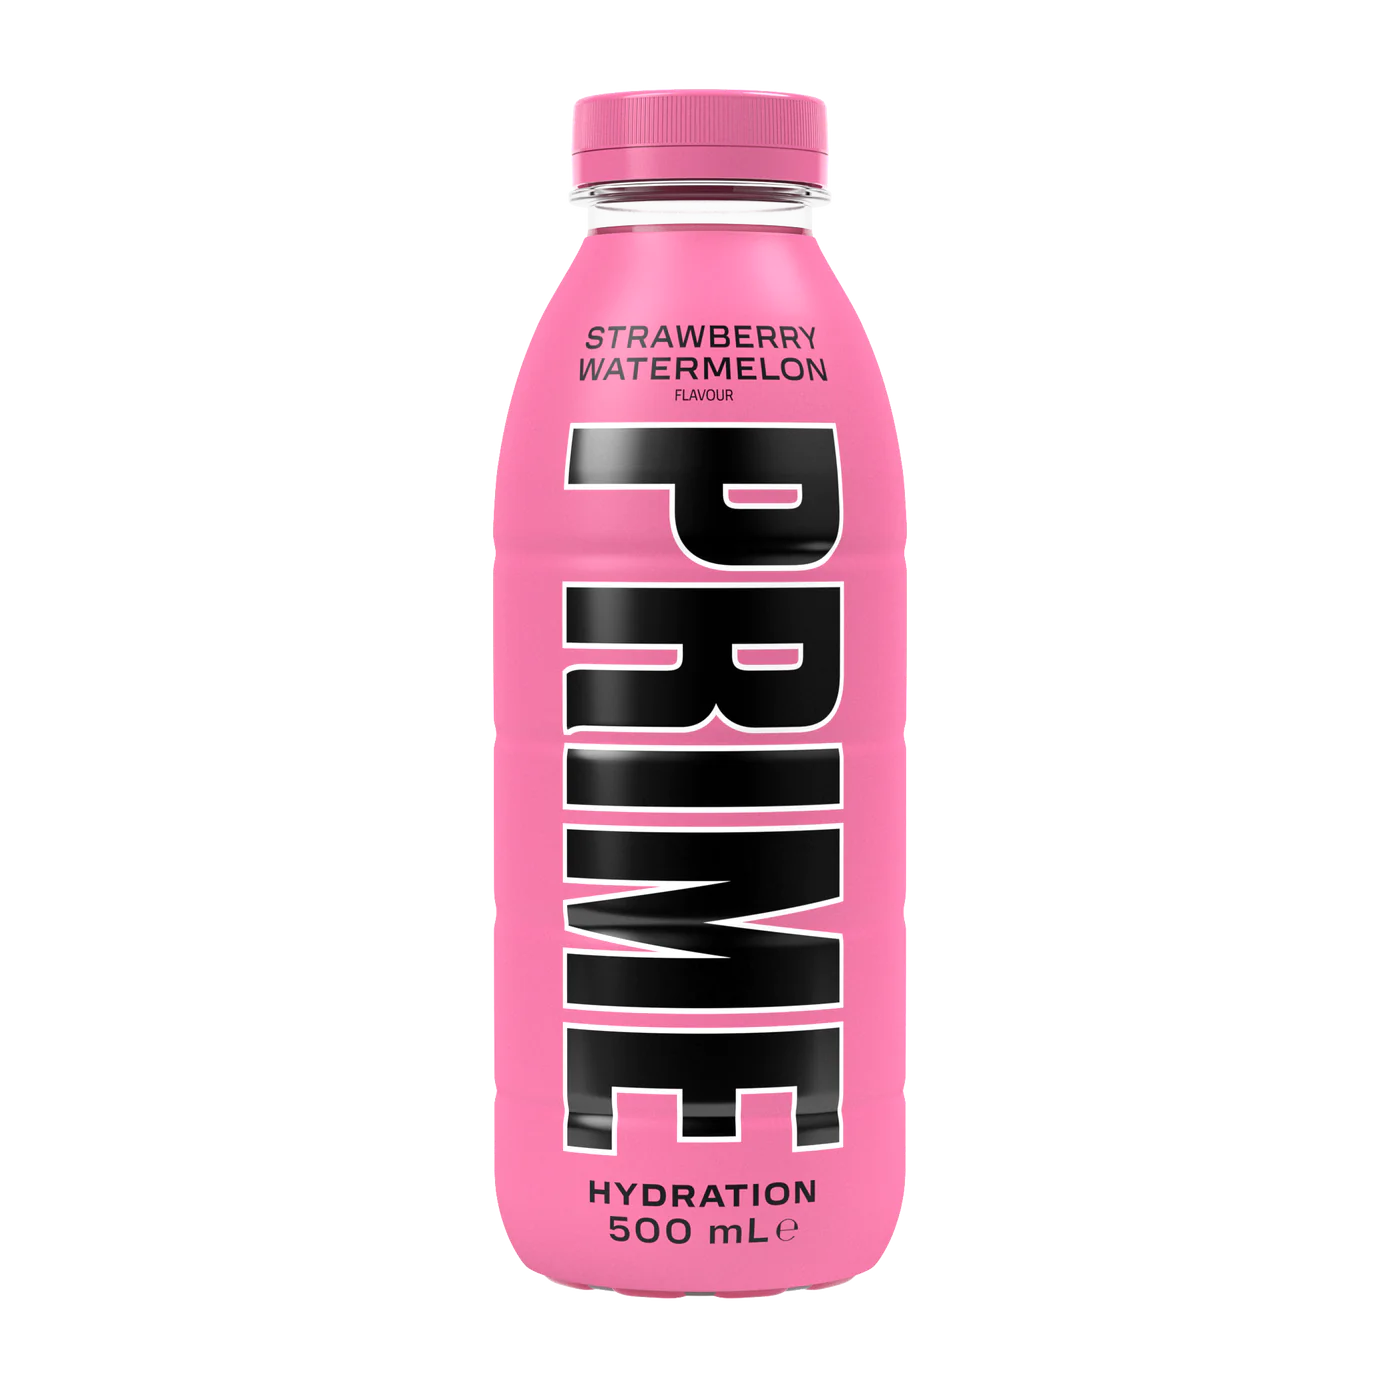 Prime Drink Hydration Strawberry Watermelon 500ml UK Bottle